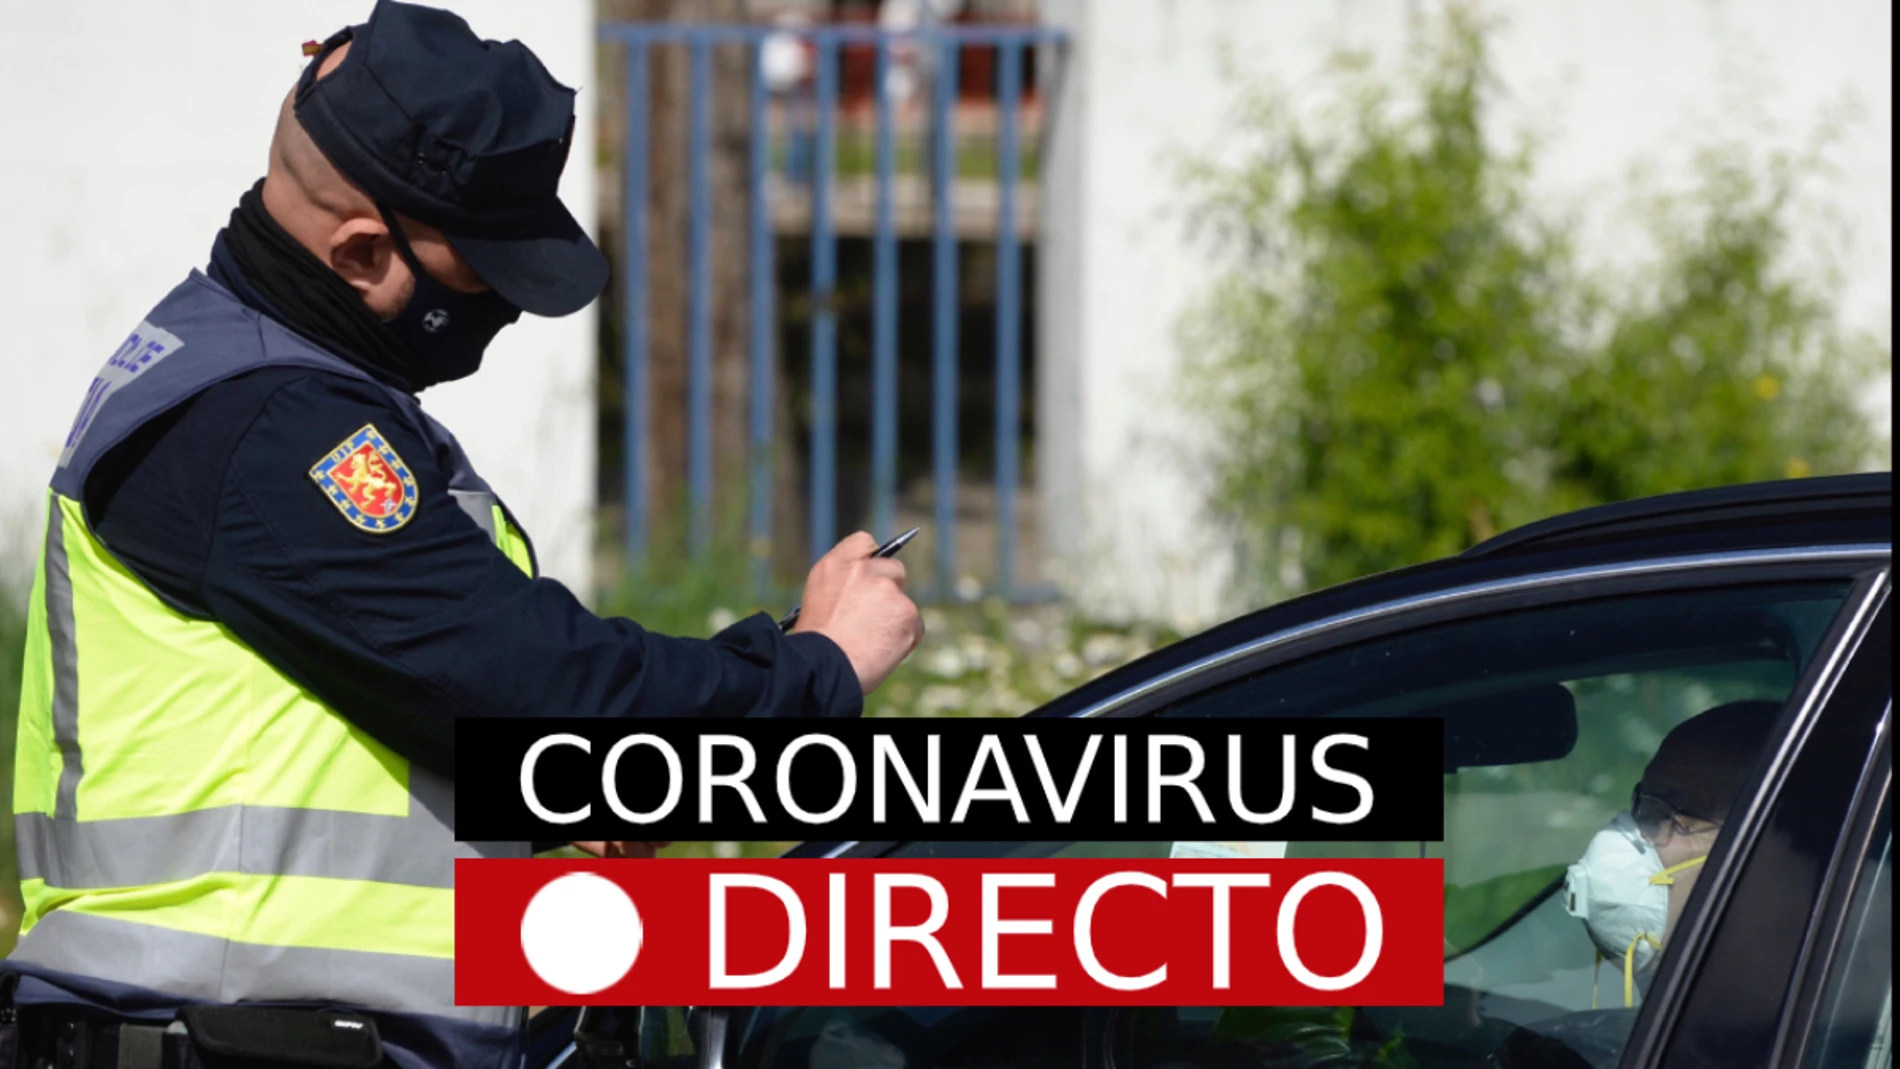 Coronavirus España hoy: Uso obligatorio de mascarillas, desescalada de la fase 1, en directo